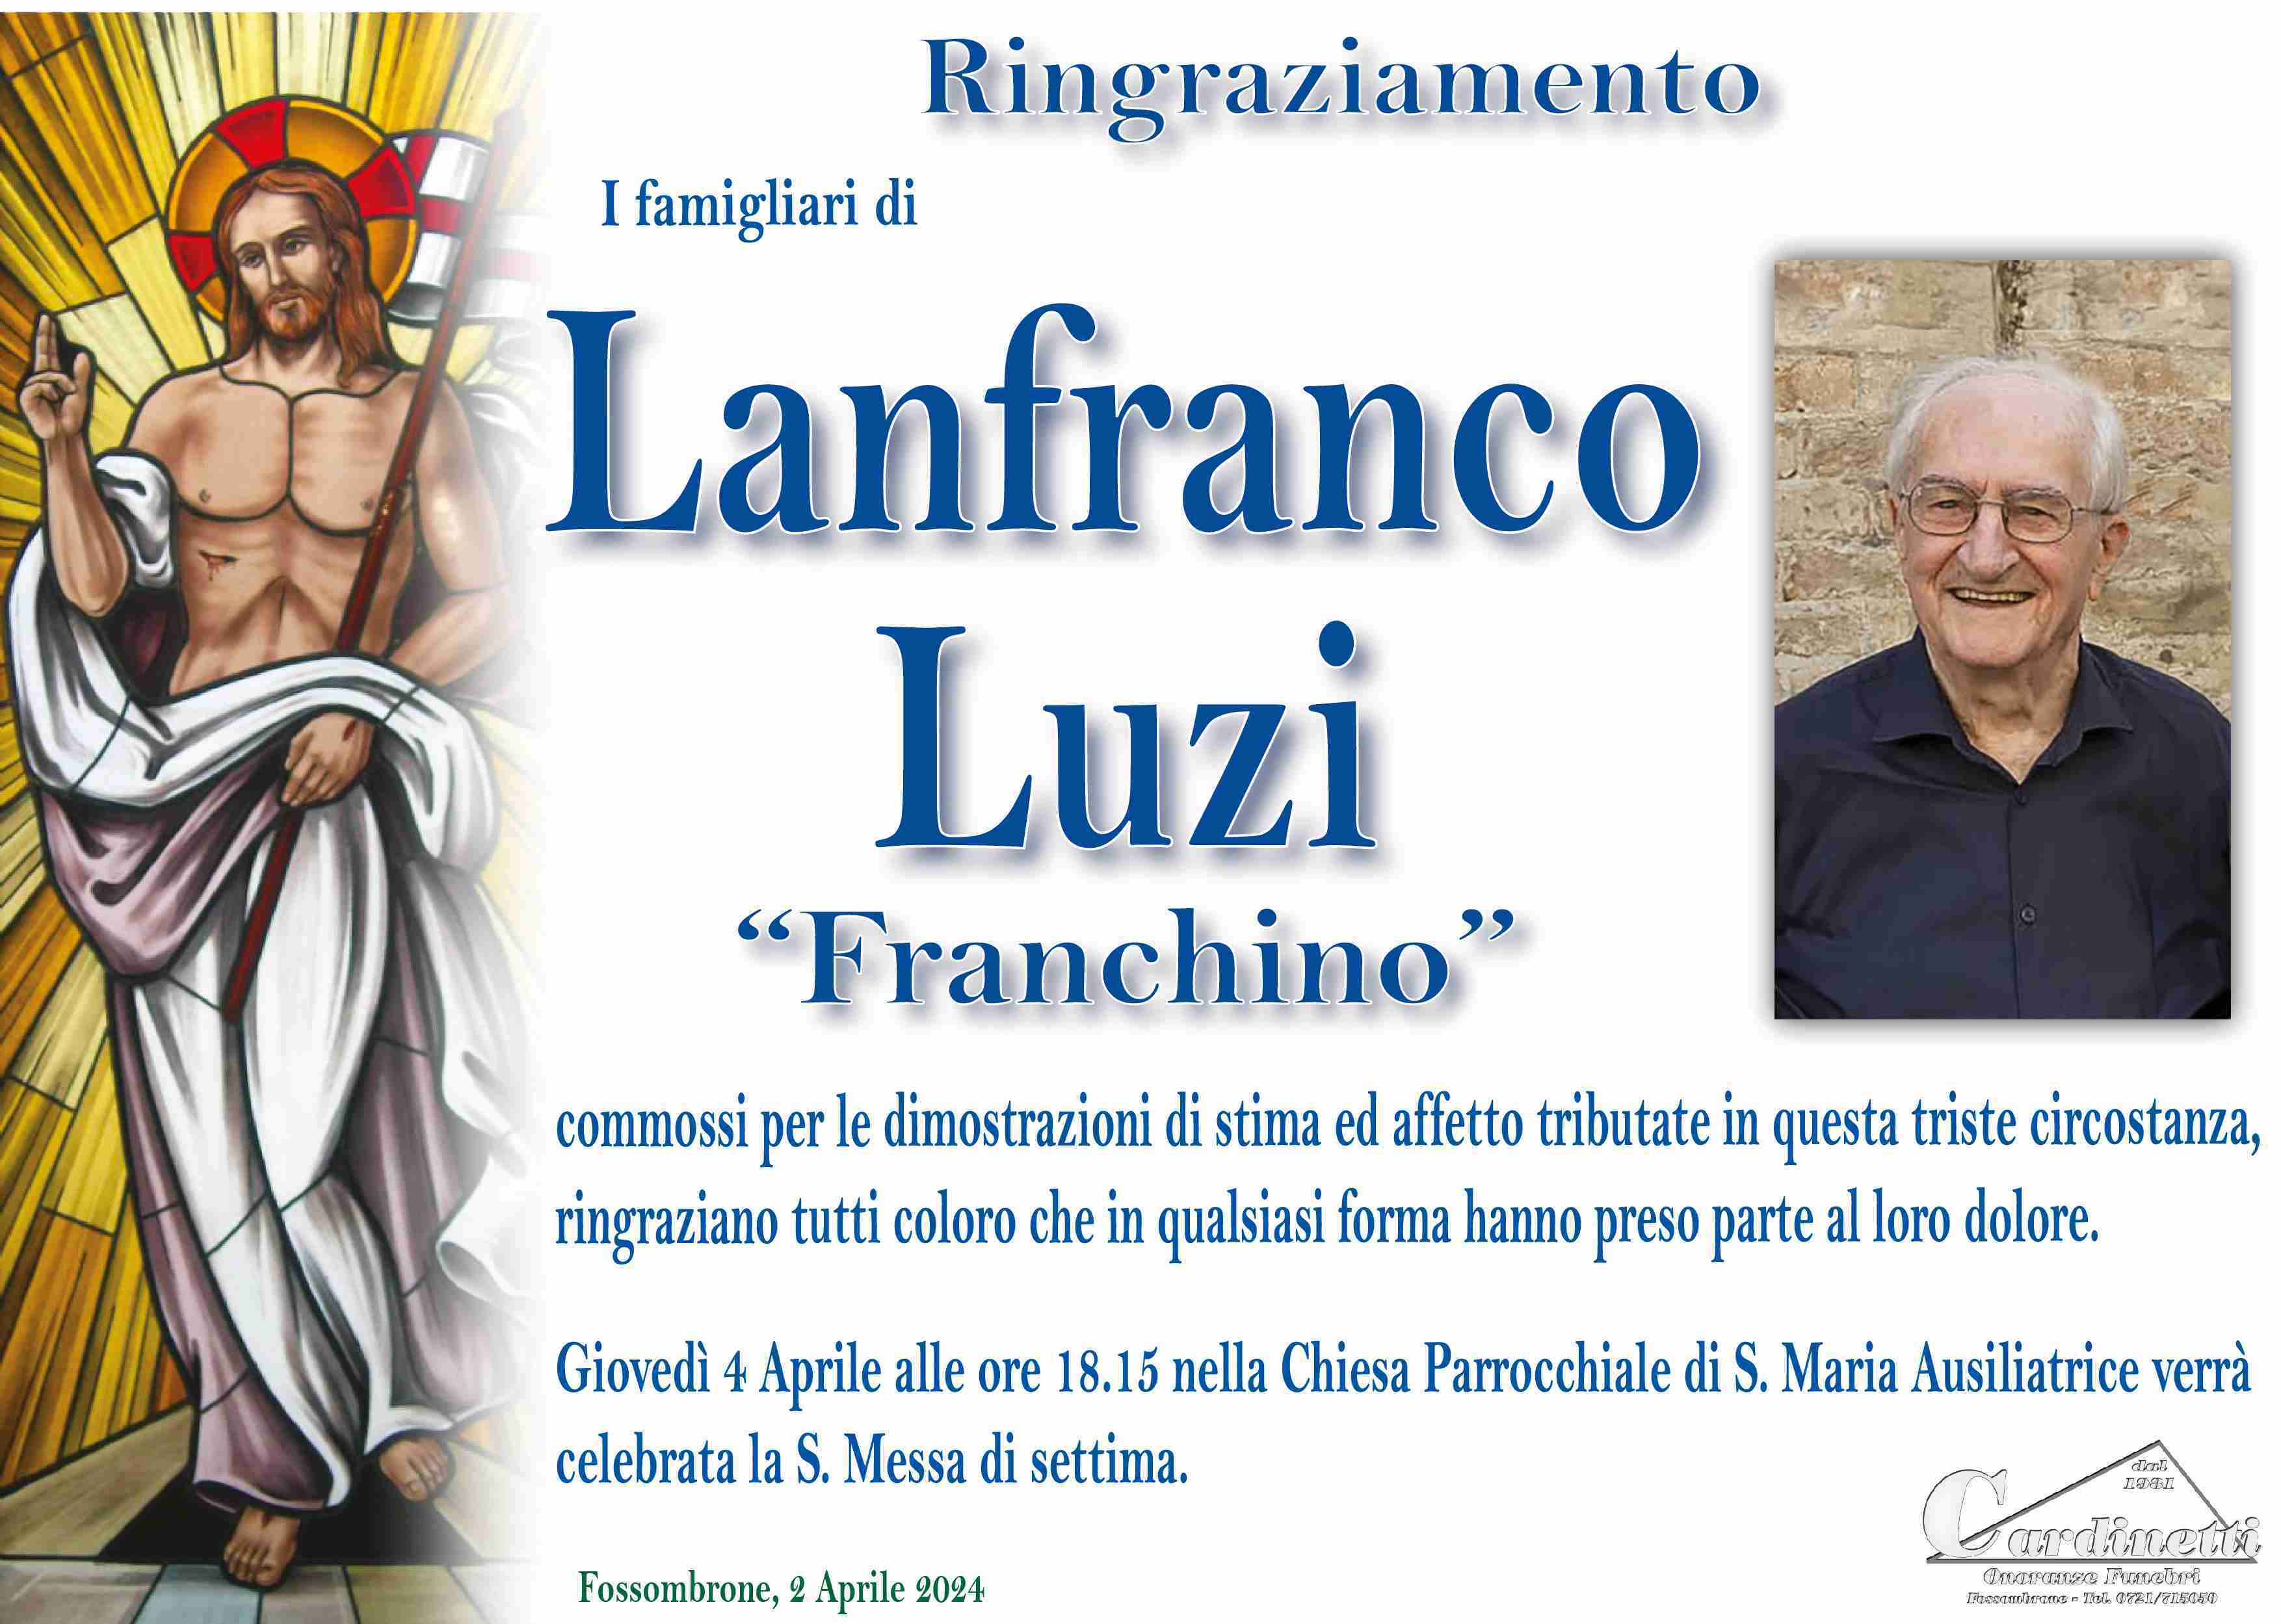 Lanfranco Luzi